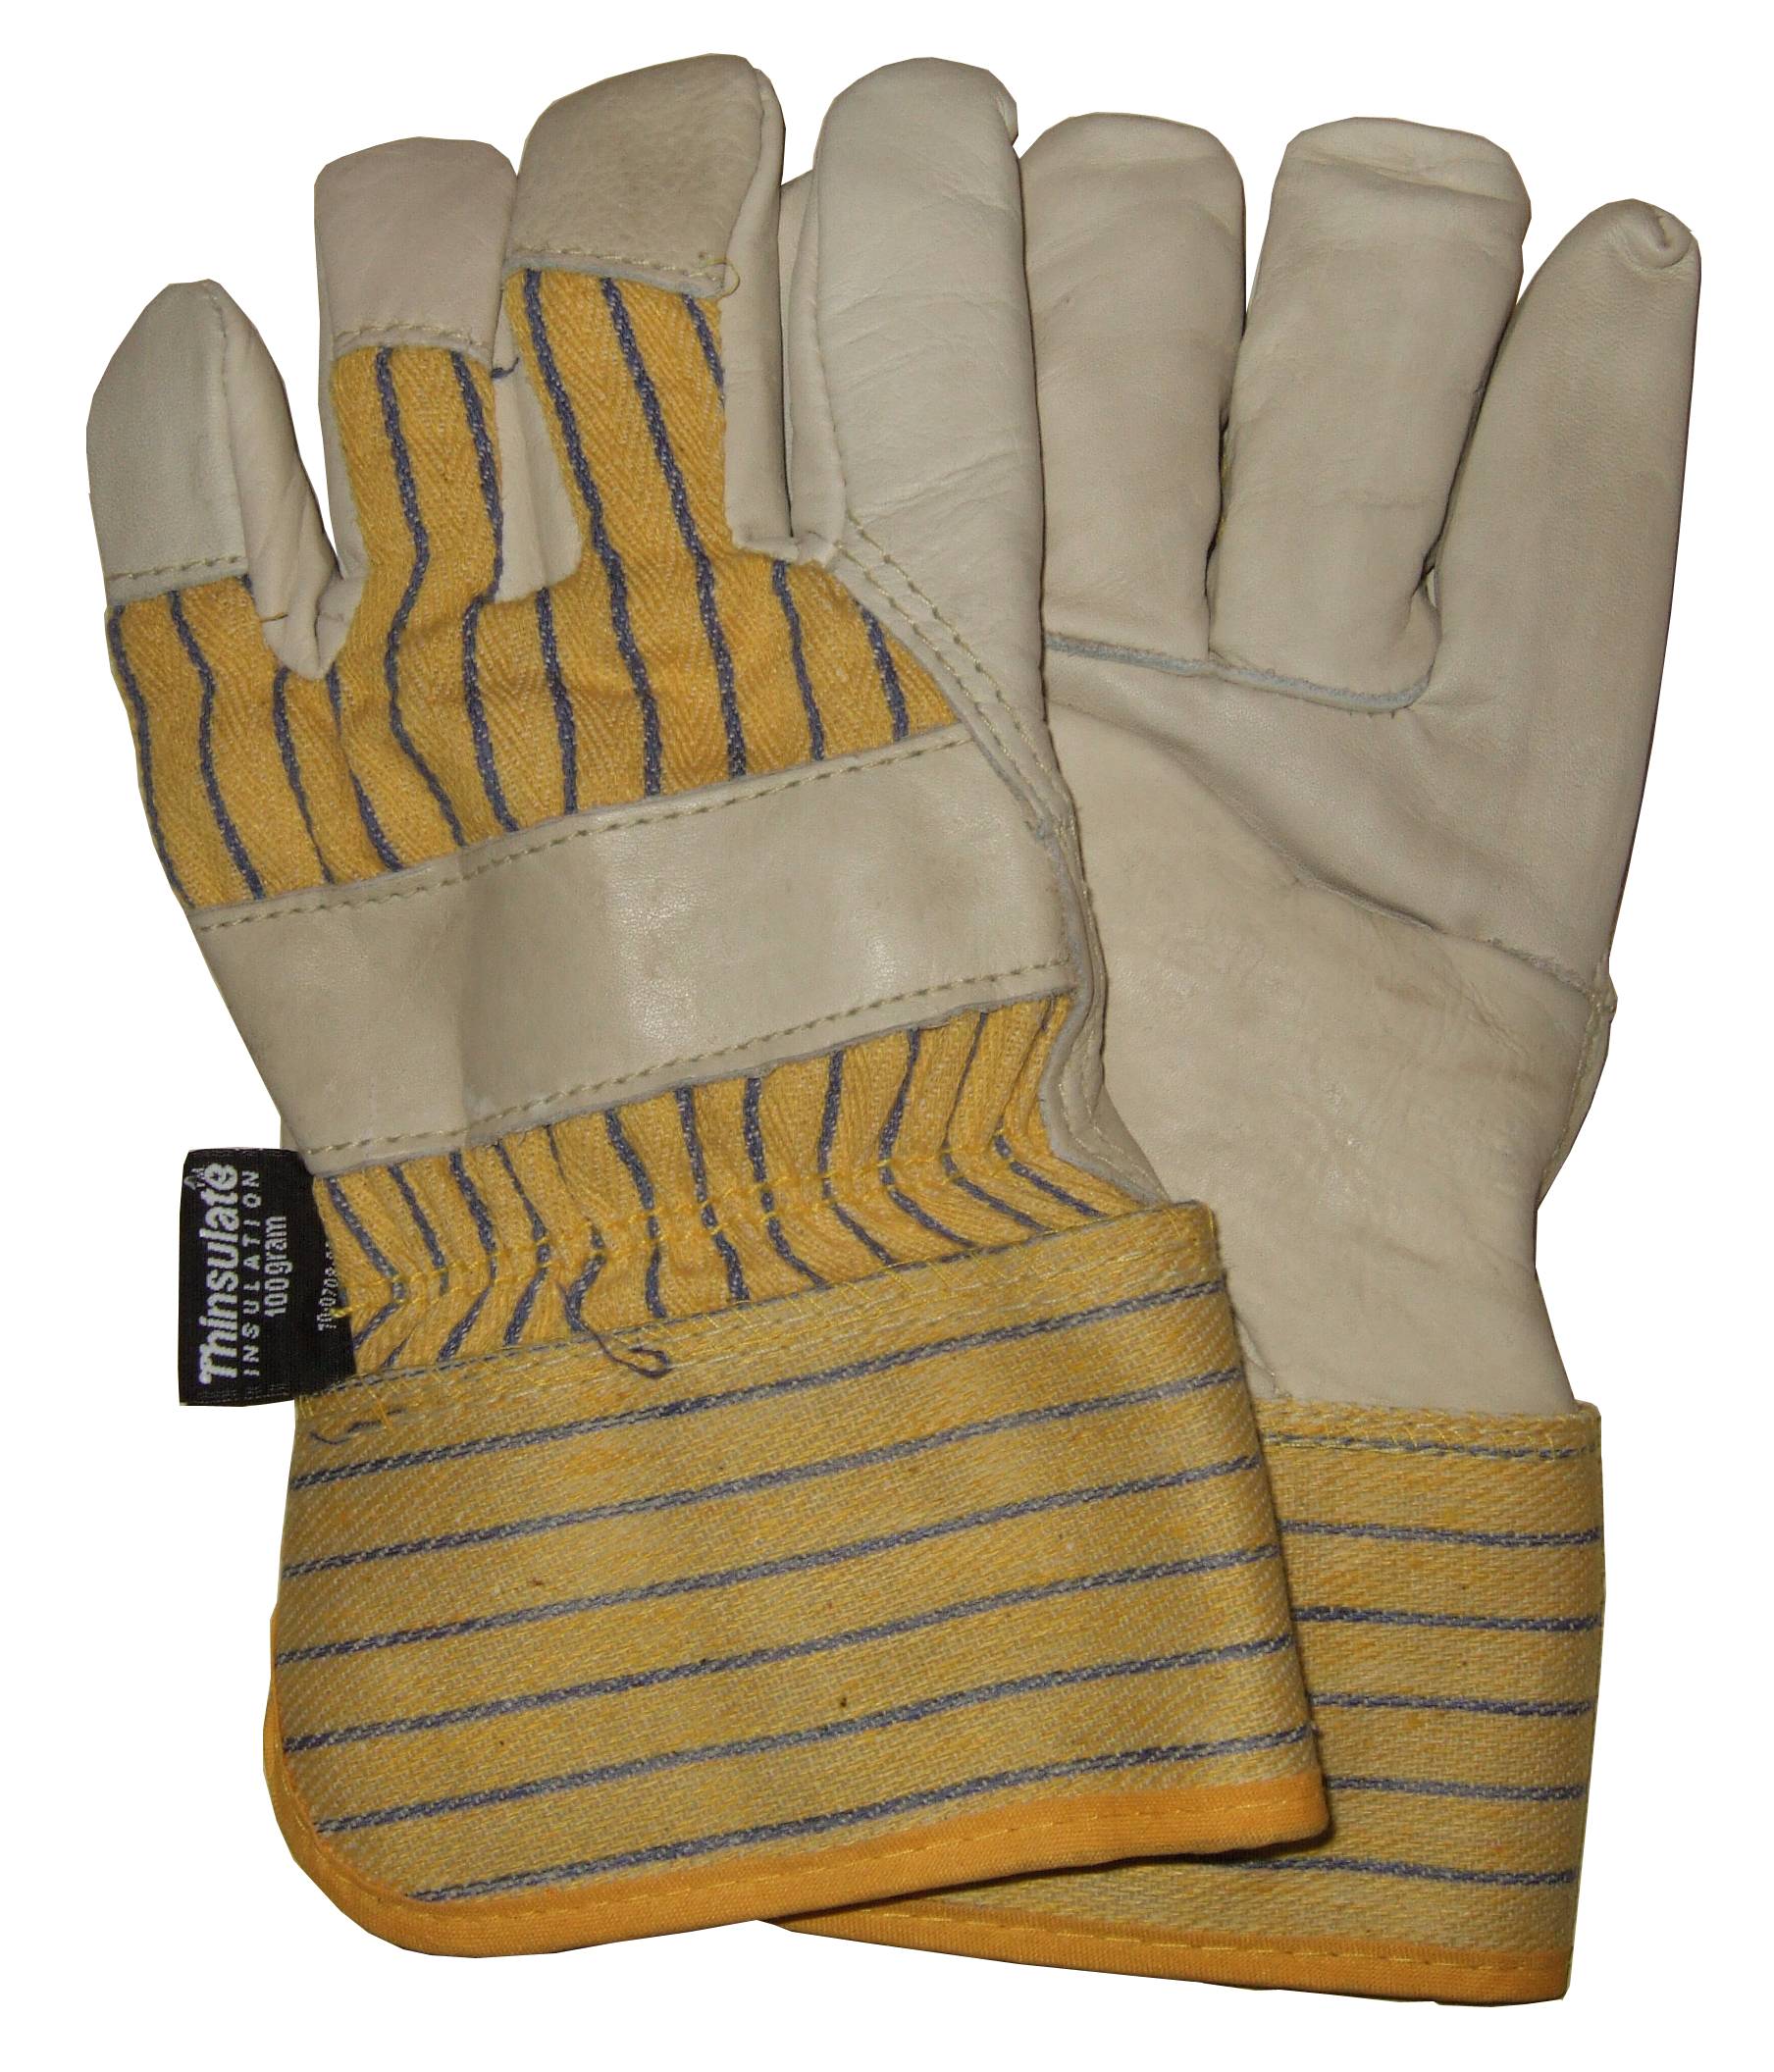 ladies winter gloves thinsulate